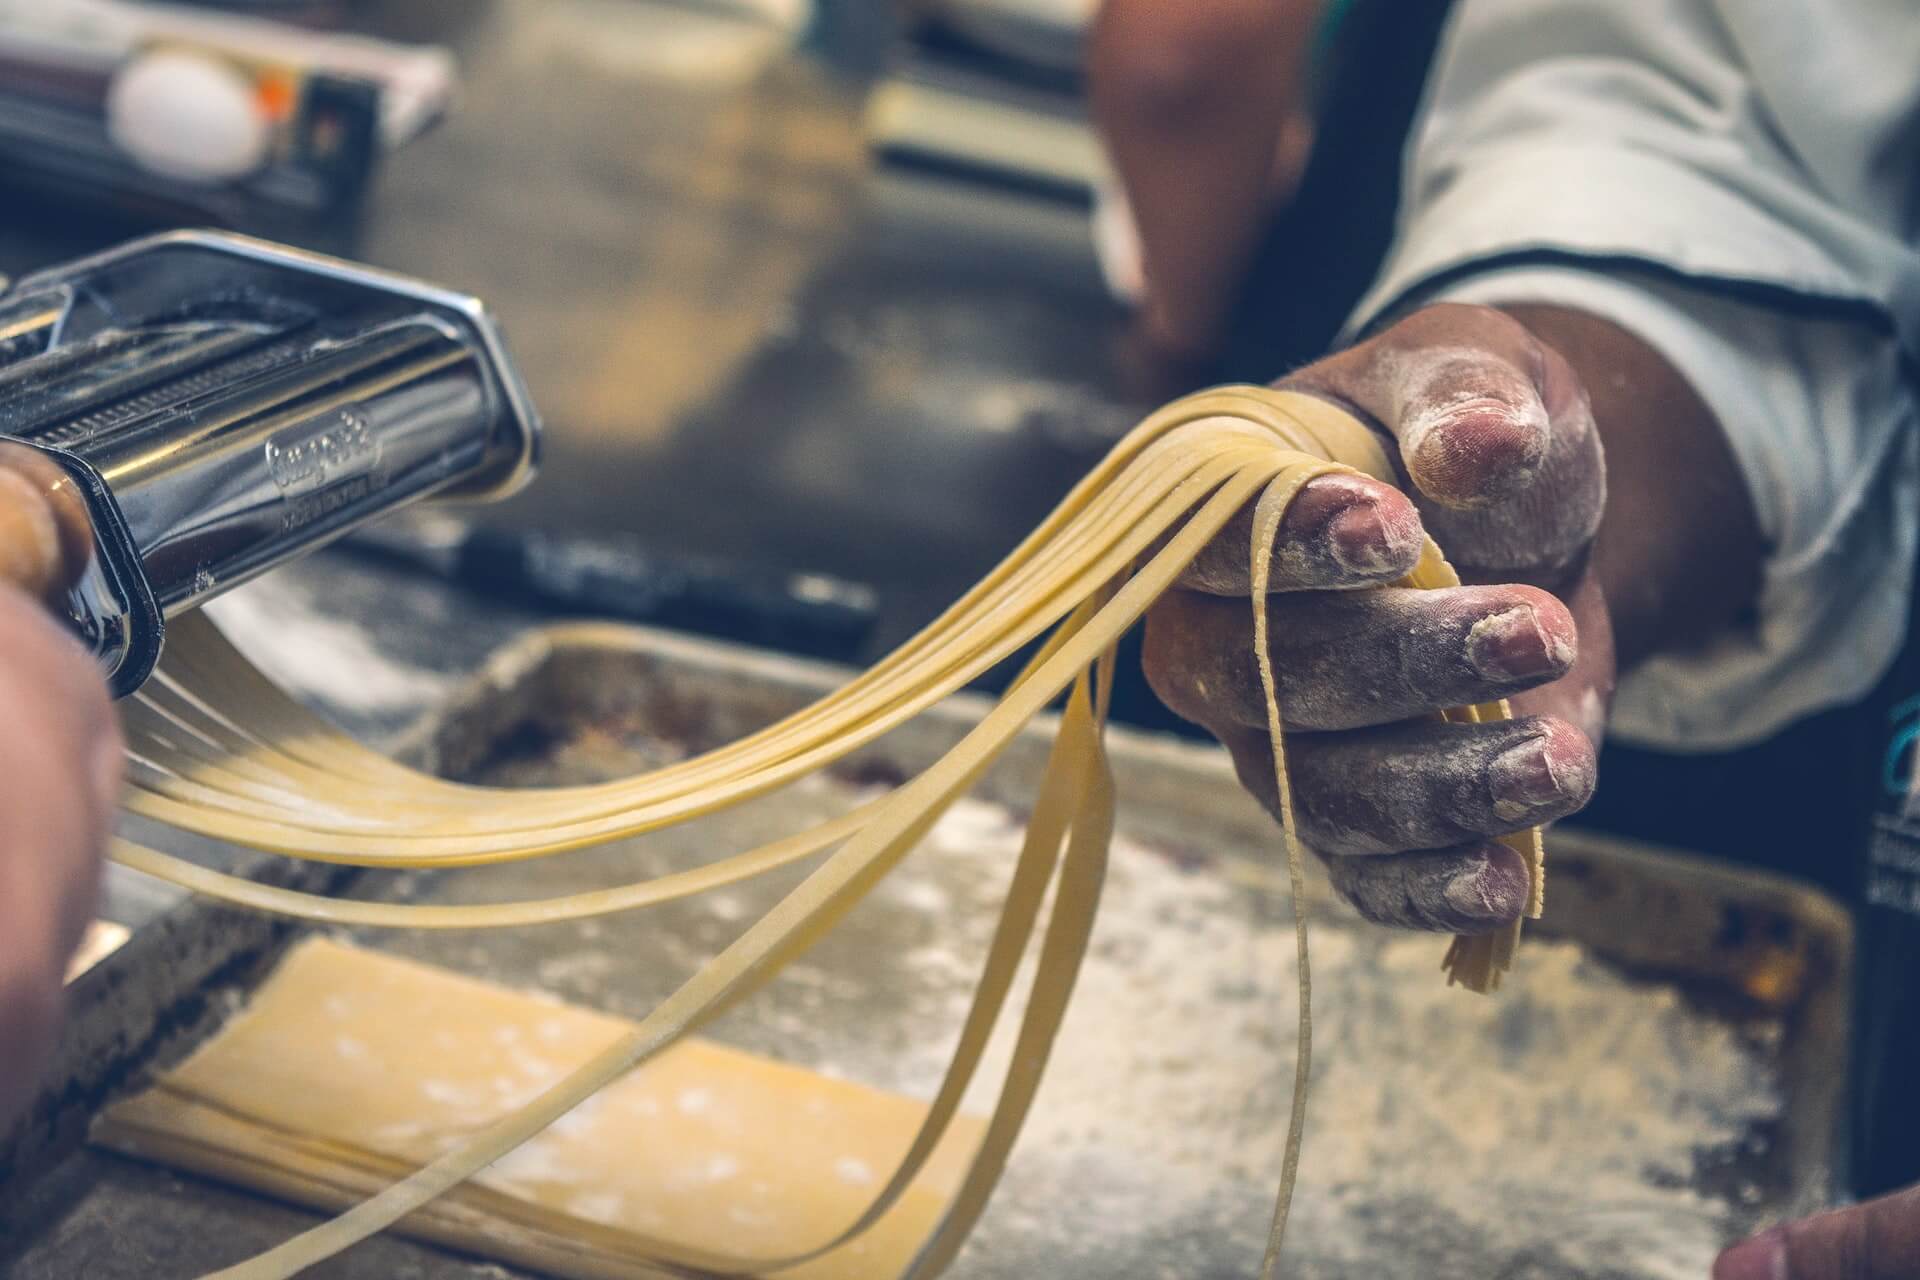 Cook making handmade pasta noodles